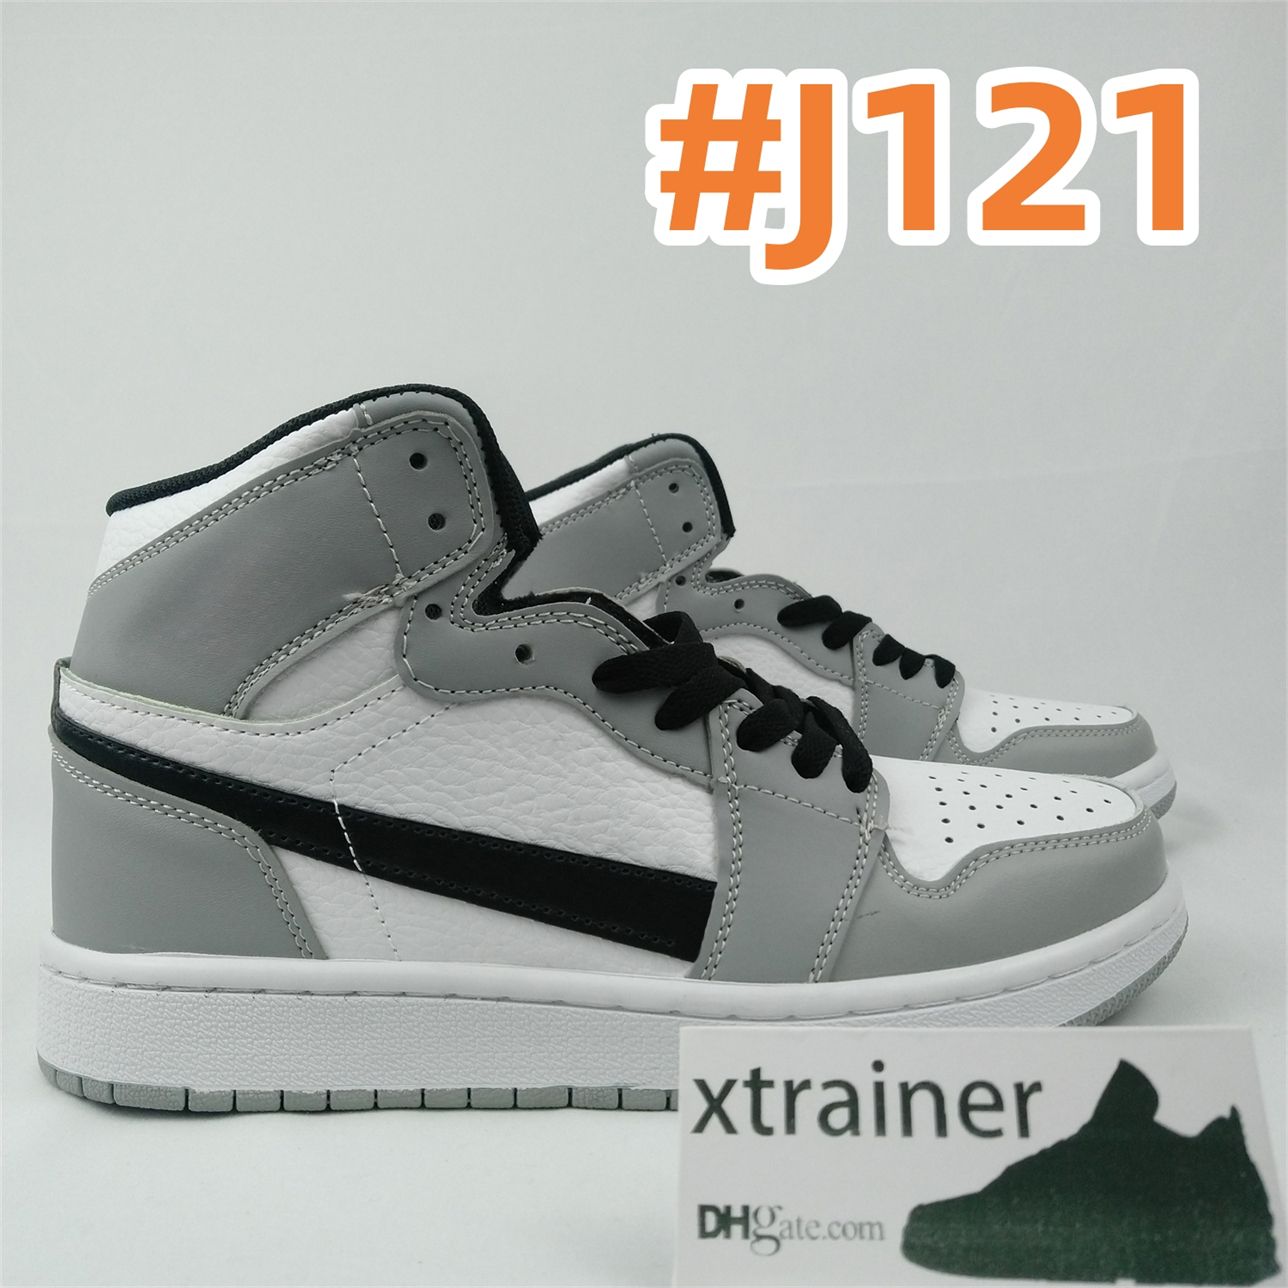 # J121